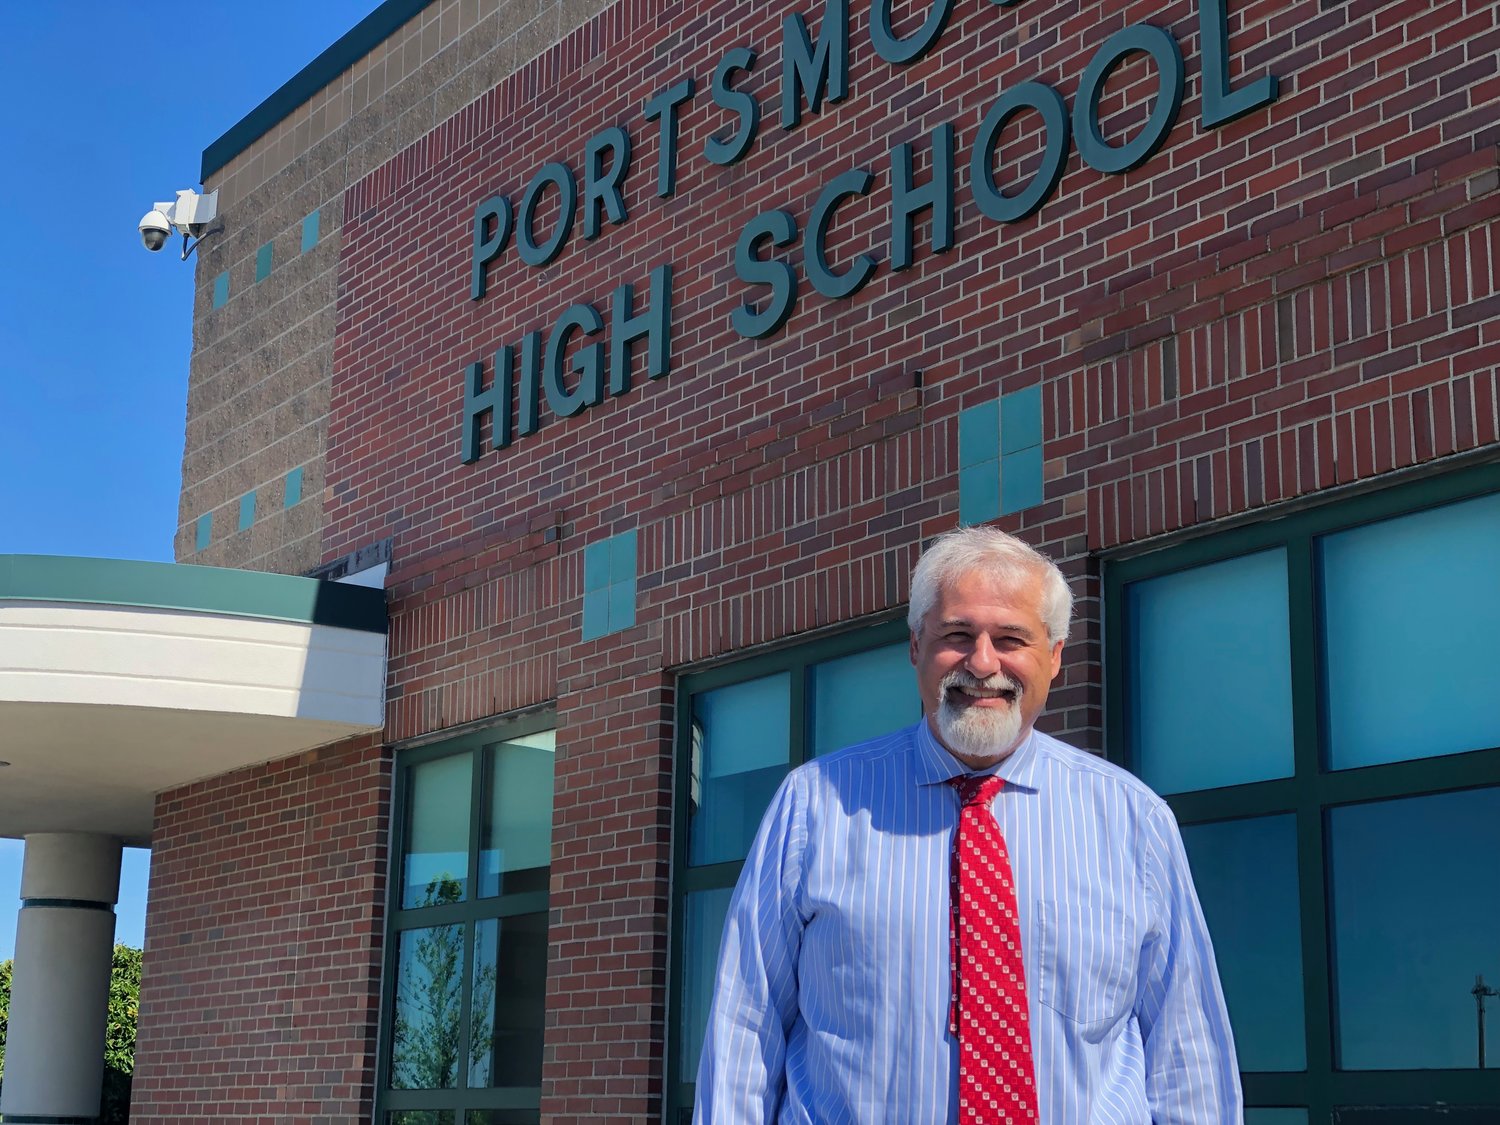 “It’s been a wonderful ride,” said retiring Portsmouth High School principal Joseph Amaral.